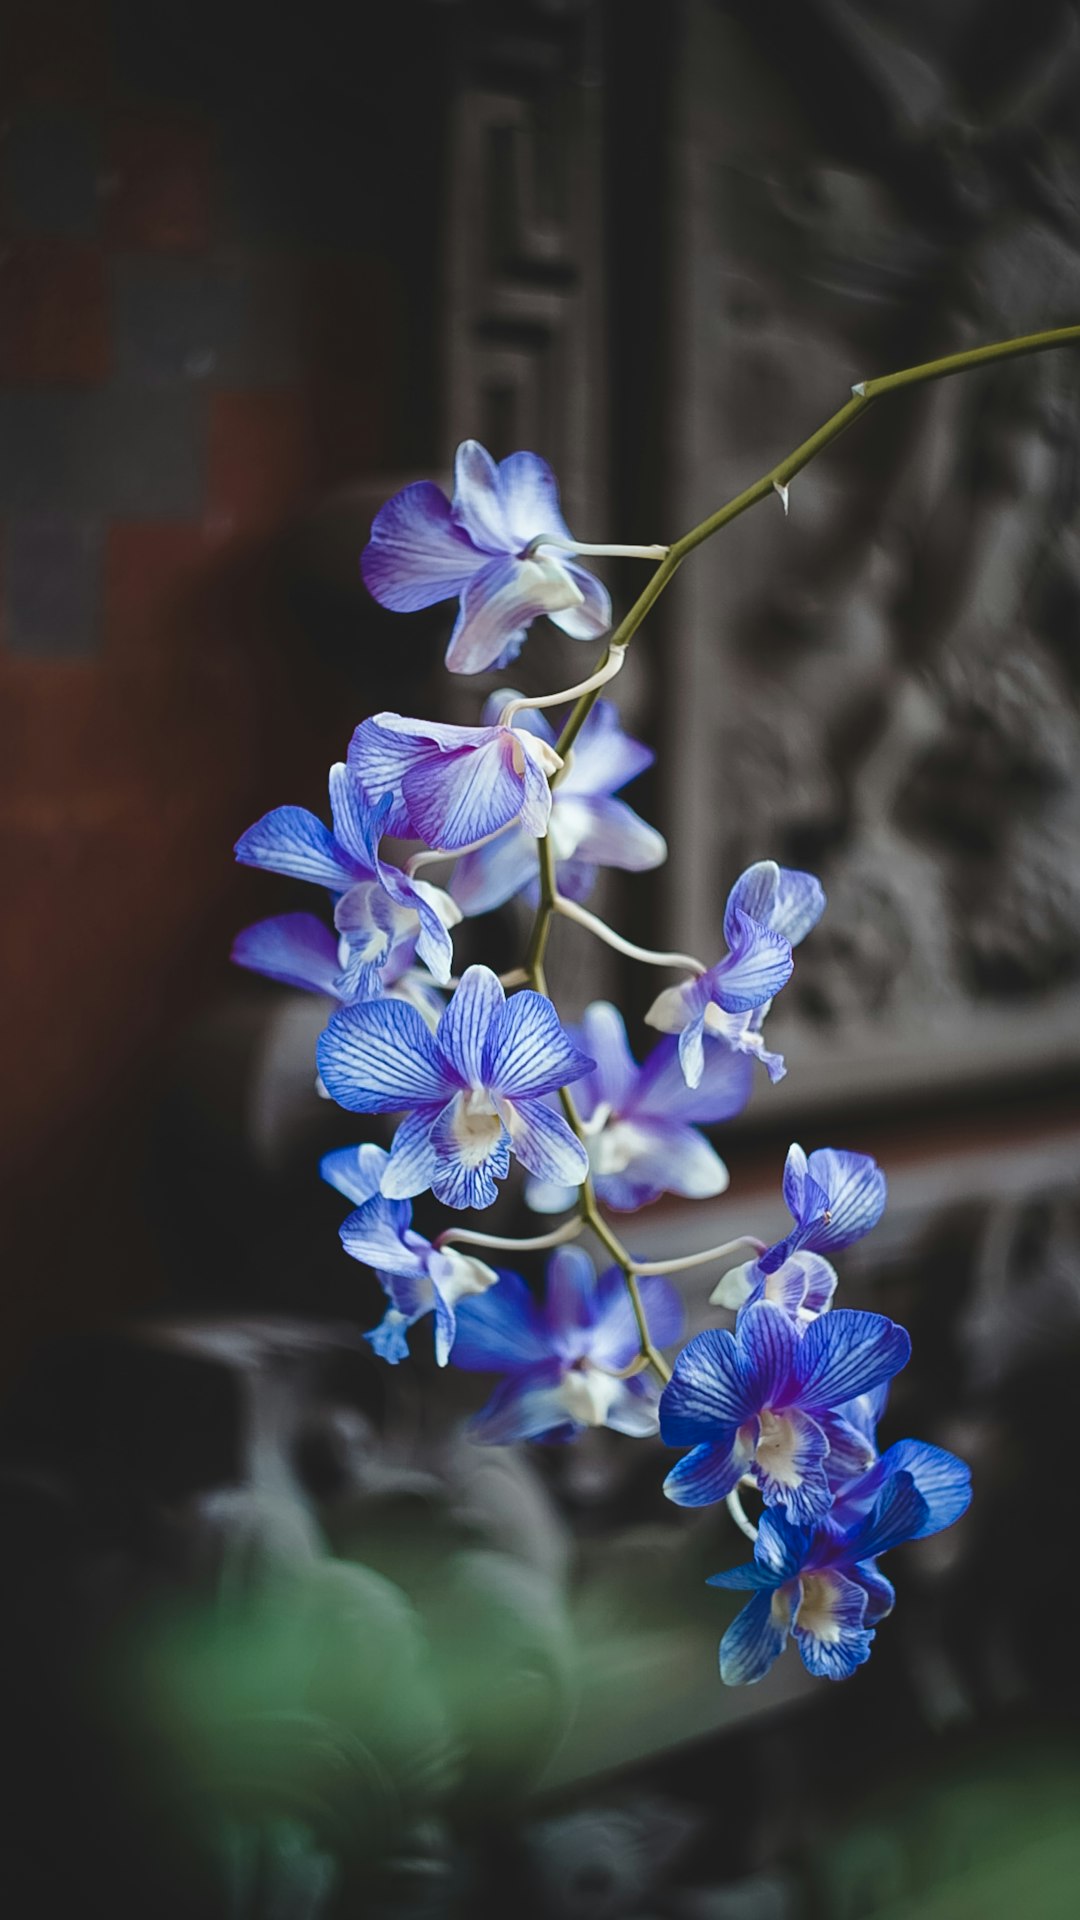 herniaria lifespan, plants, blue and white flowers in tilt shift lens